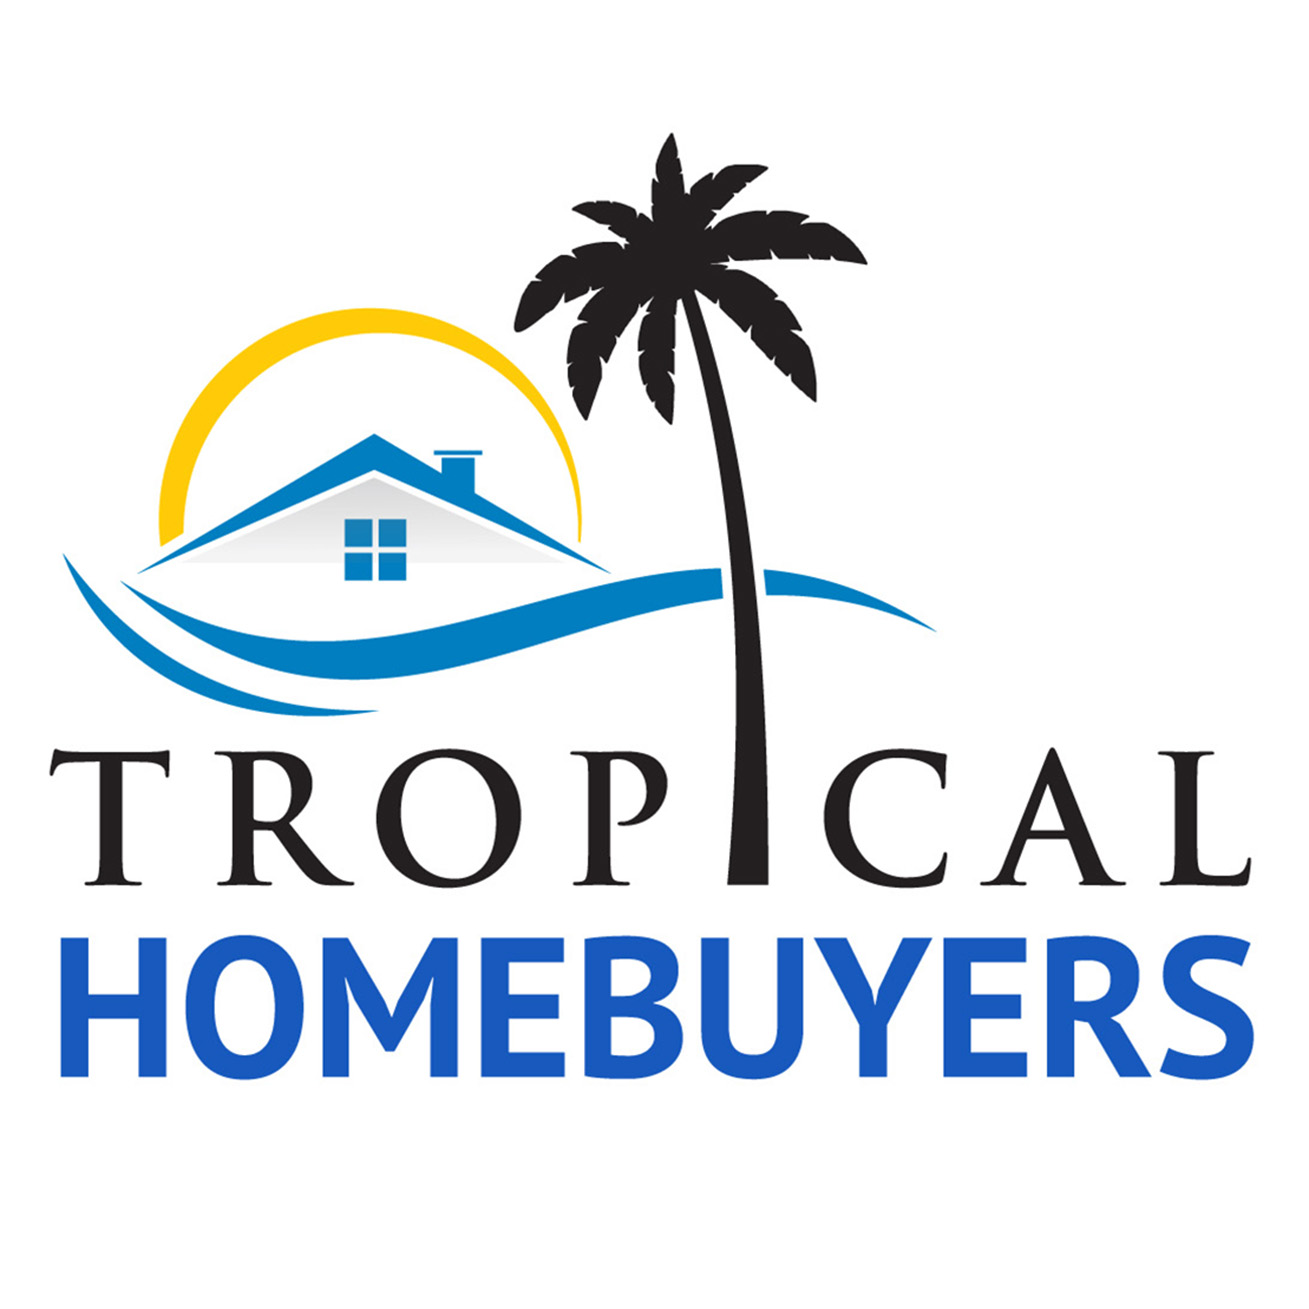 Tropical Homebuyers